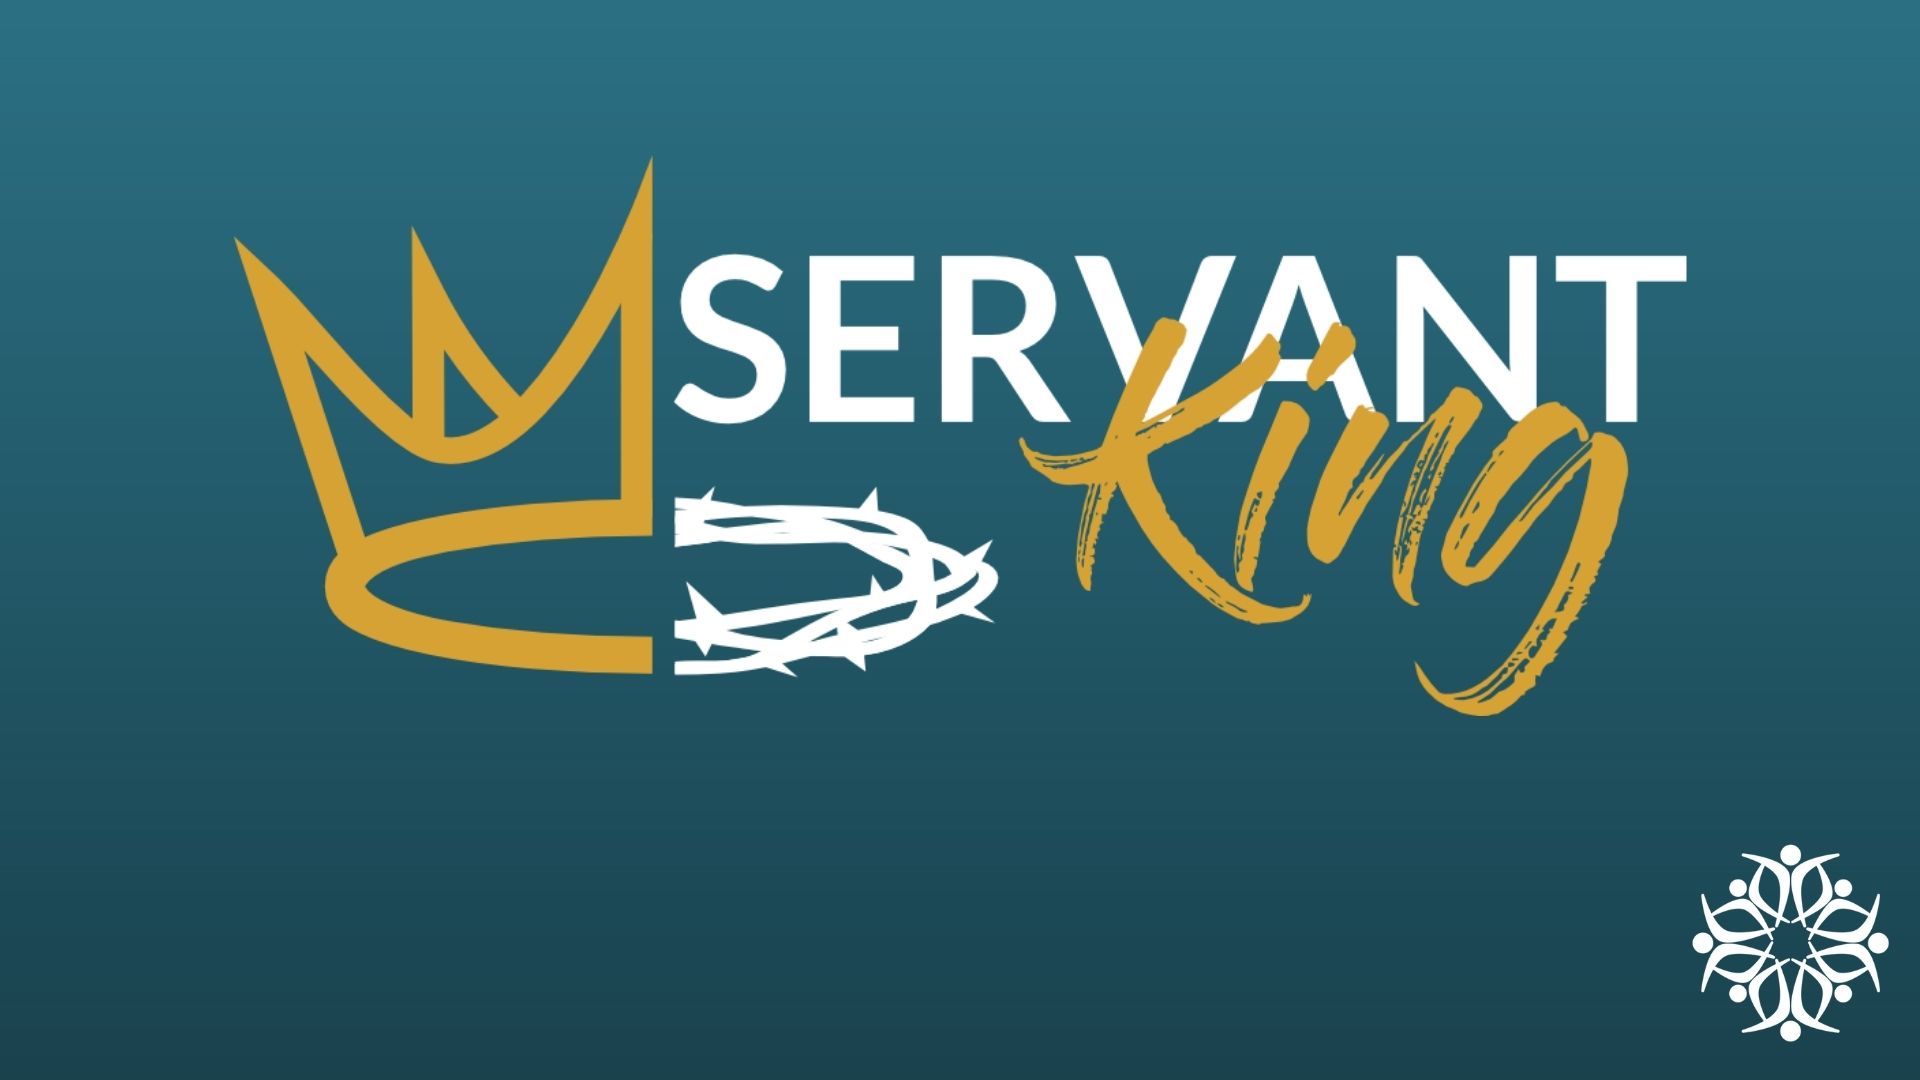 The Servant King’s Love